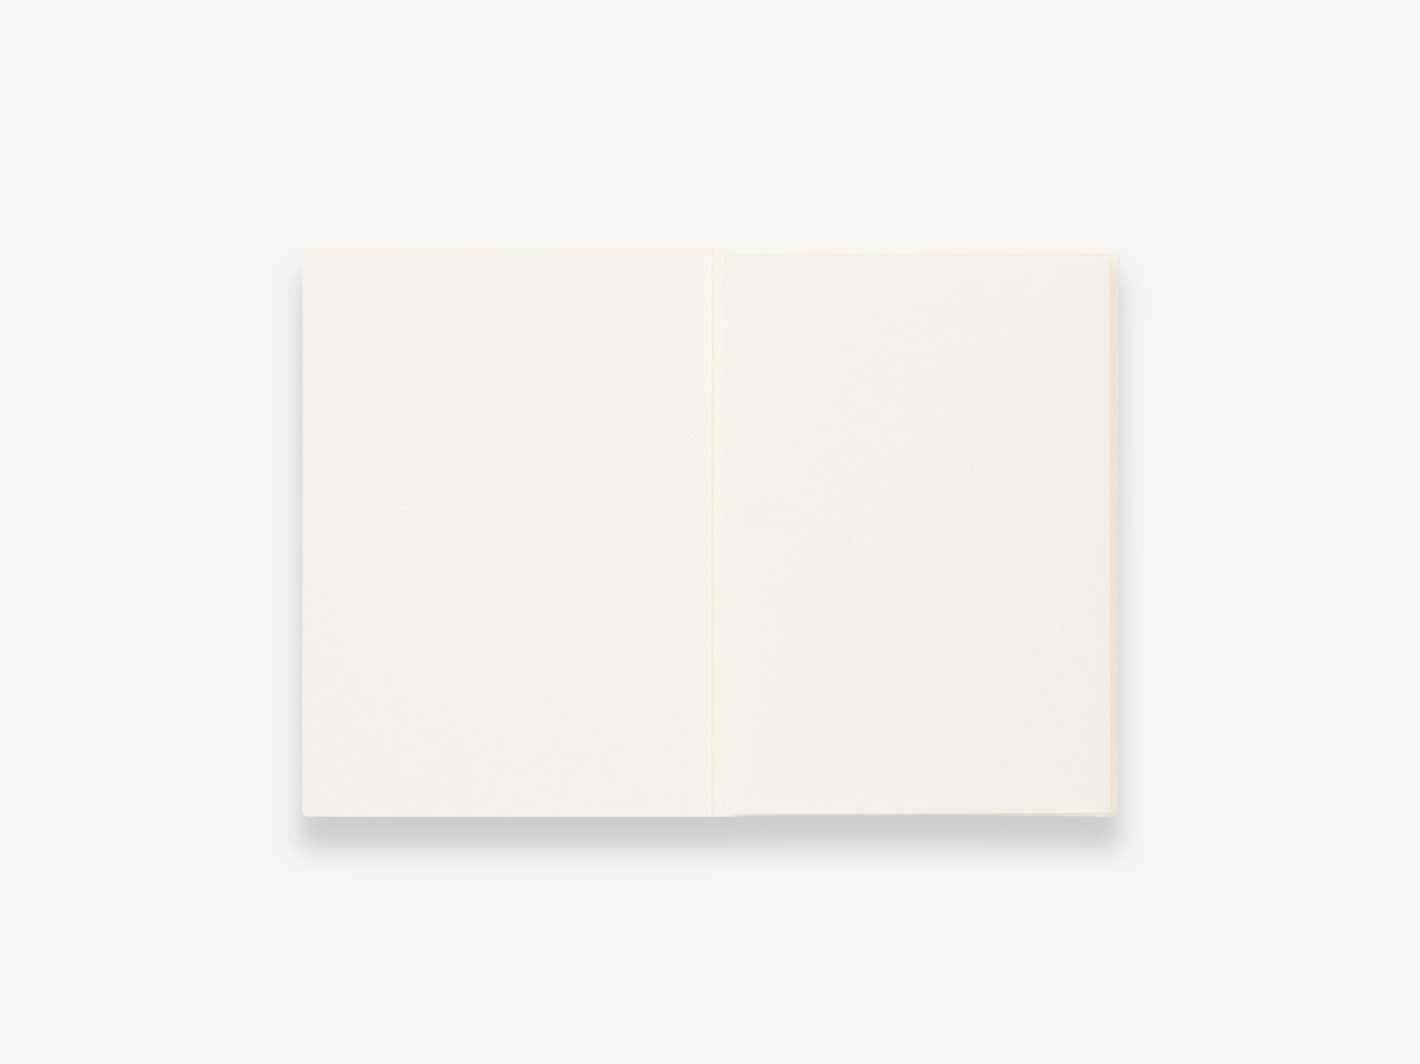 018. Accordion Fold Paper Refill Passport Size TRAVELER'S notebook